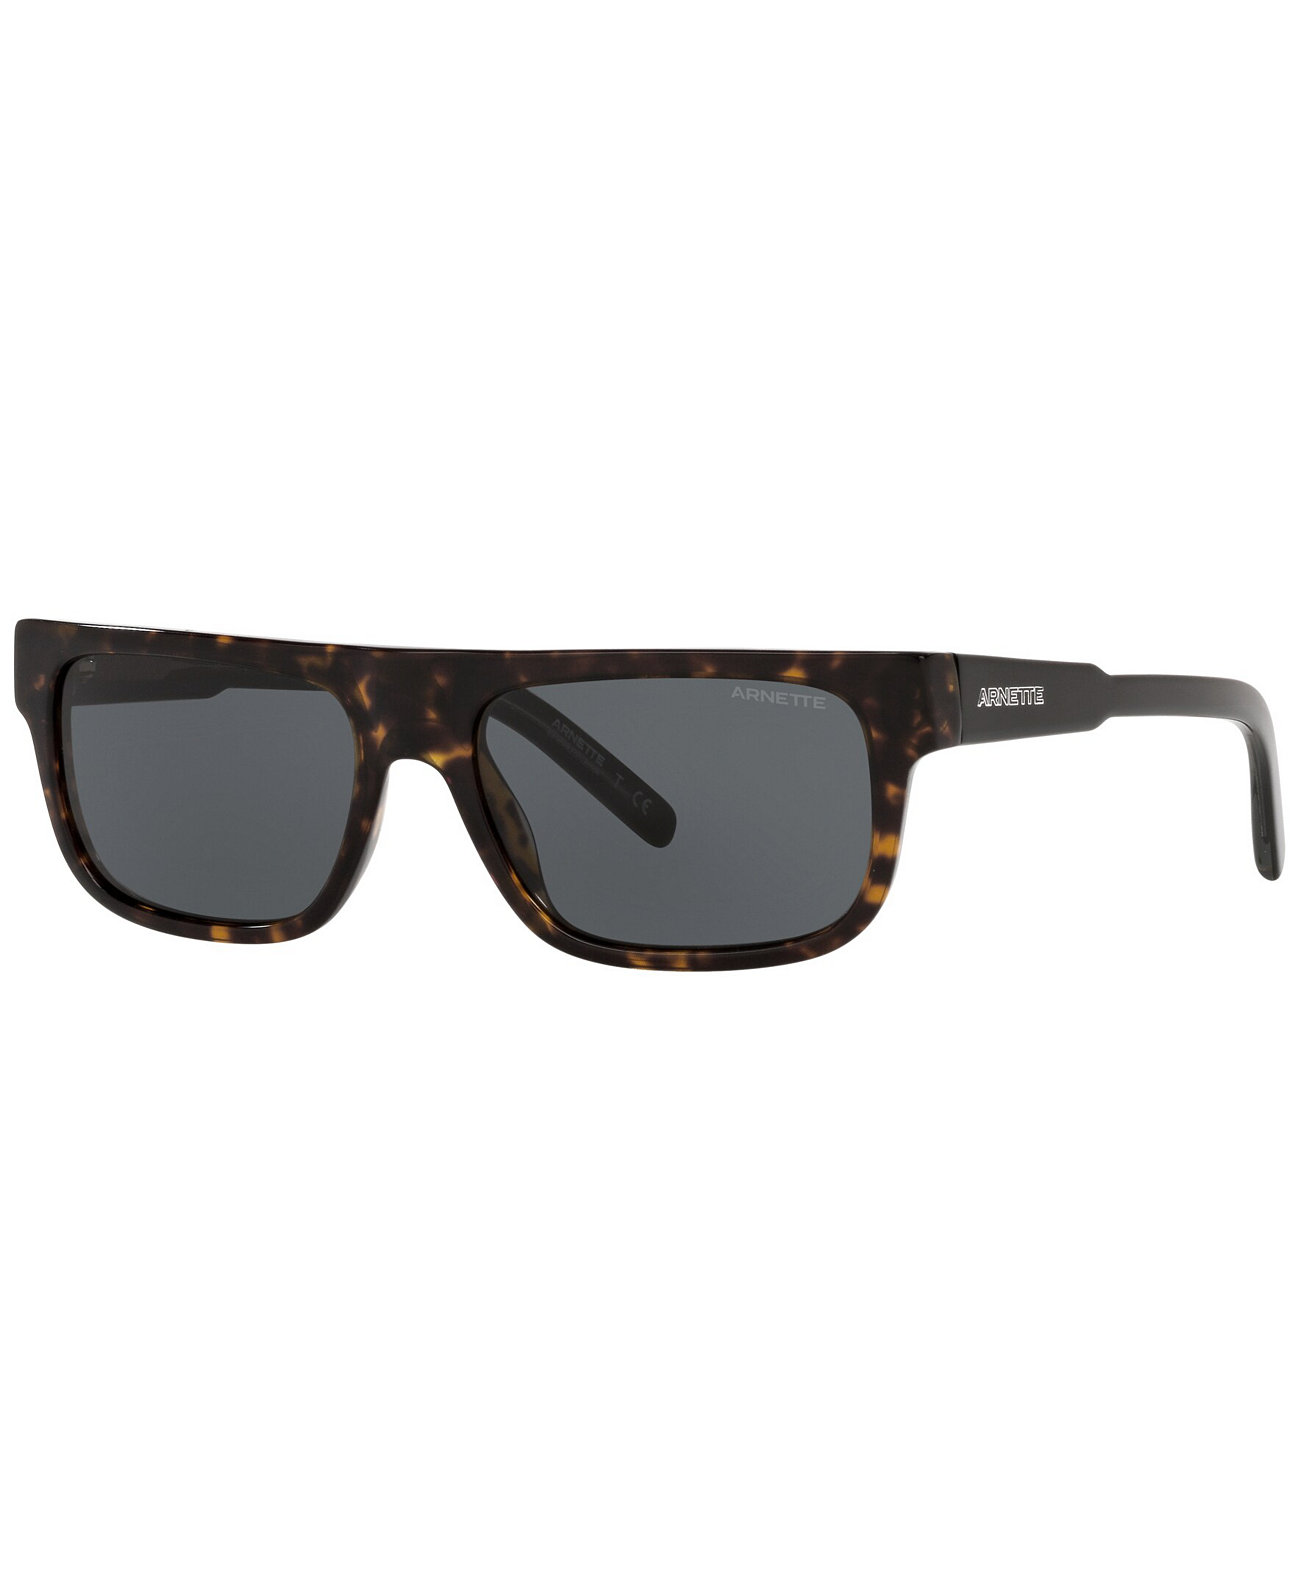 Мужские солнцезащитные очки Gothboy, AN4278 55 Arnette